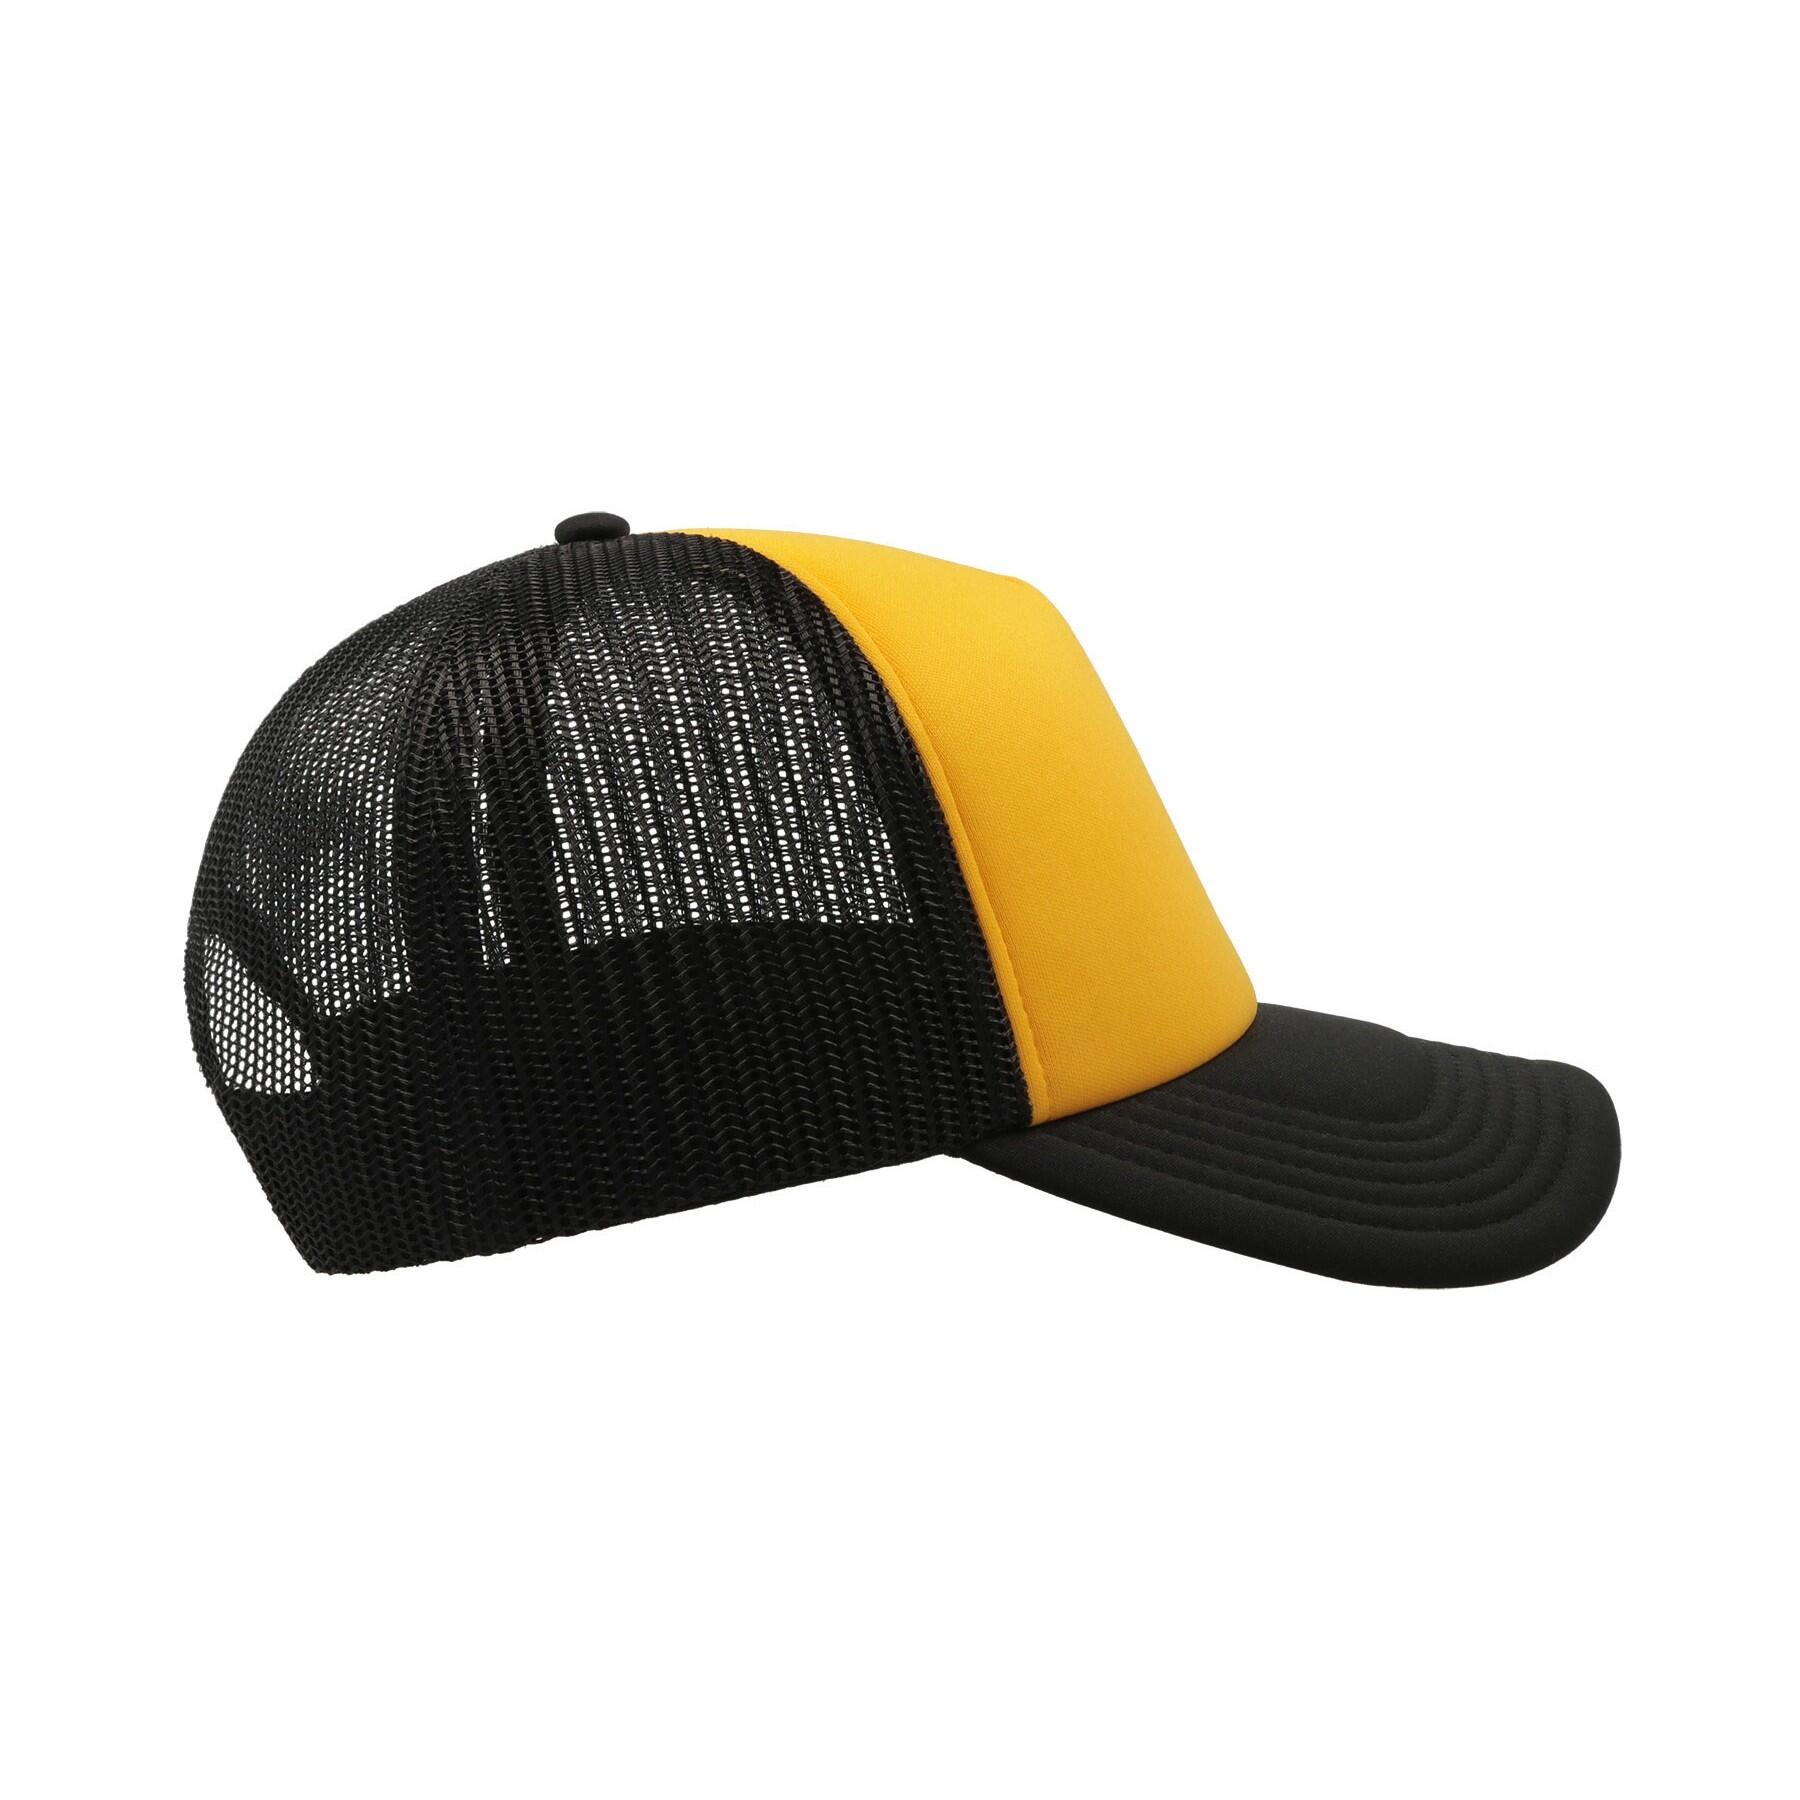 Rapper 5 Panel Trucker Cap (Yellow/Black) 4/4